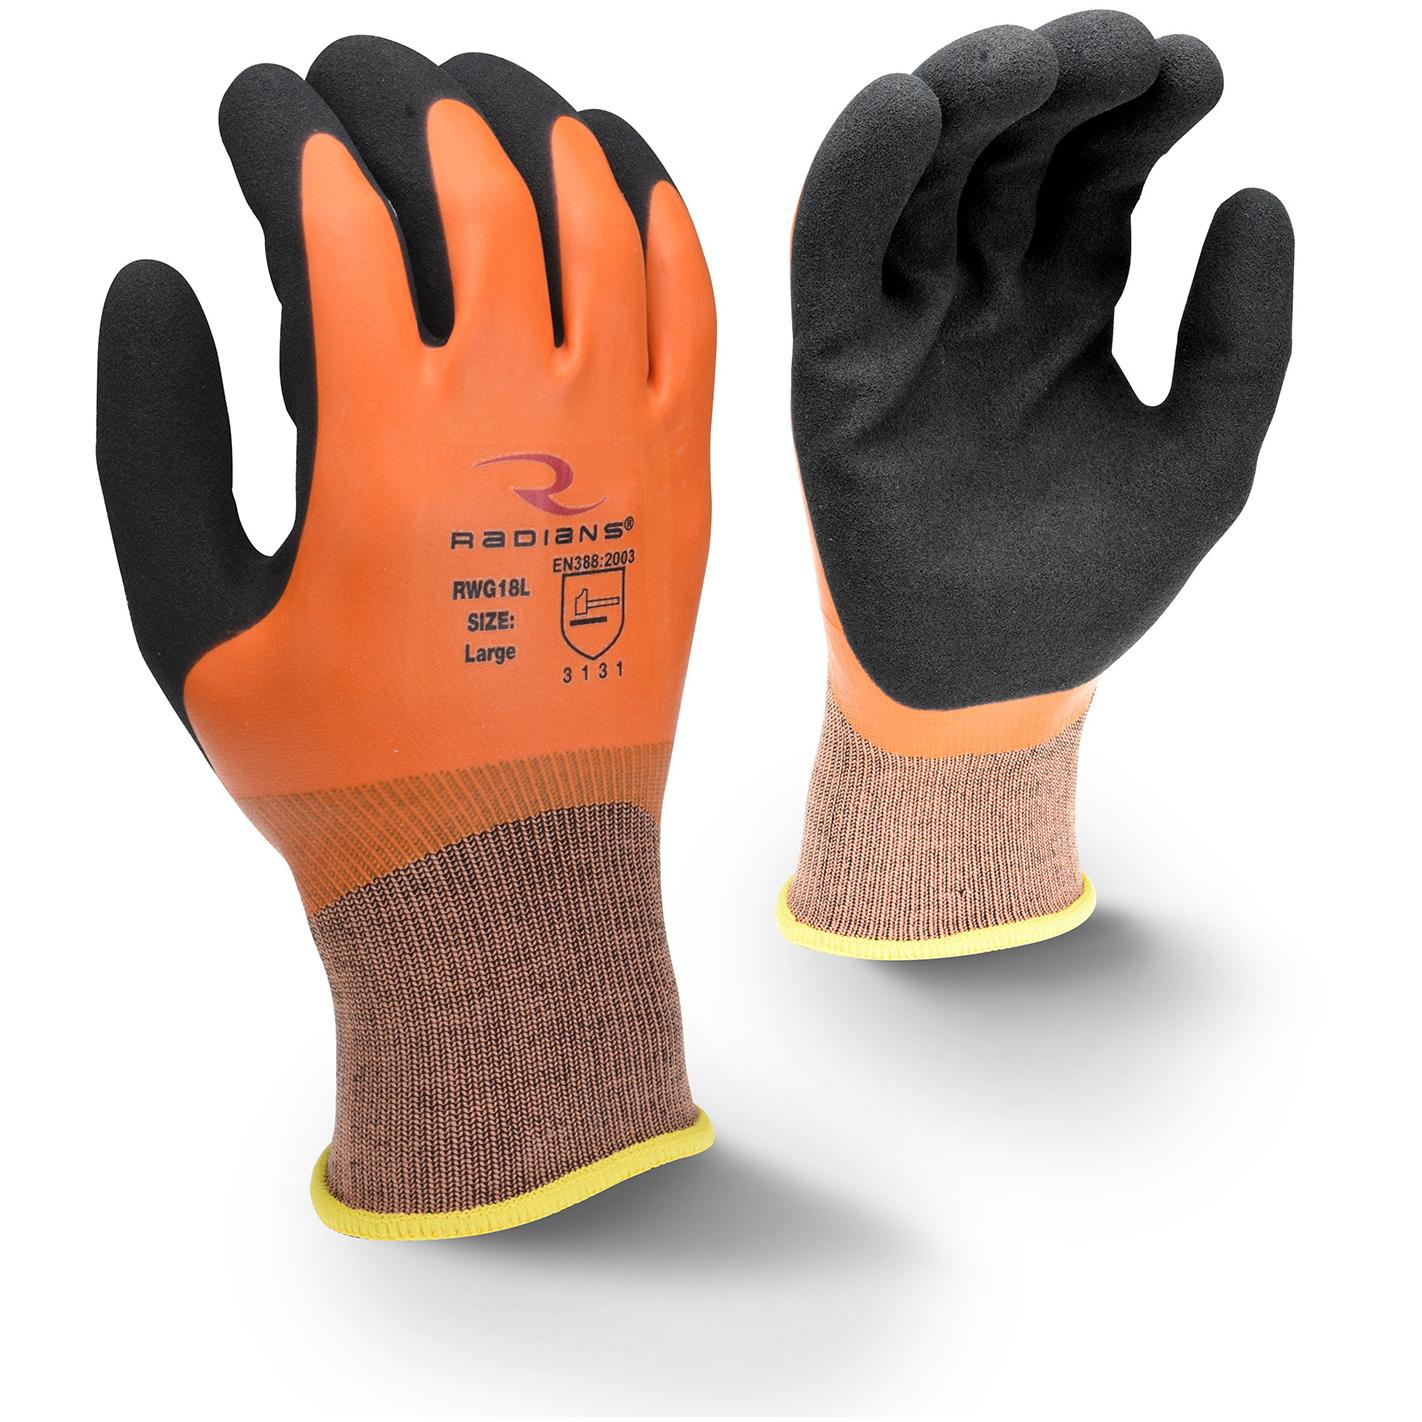 latex work gloves